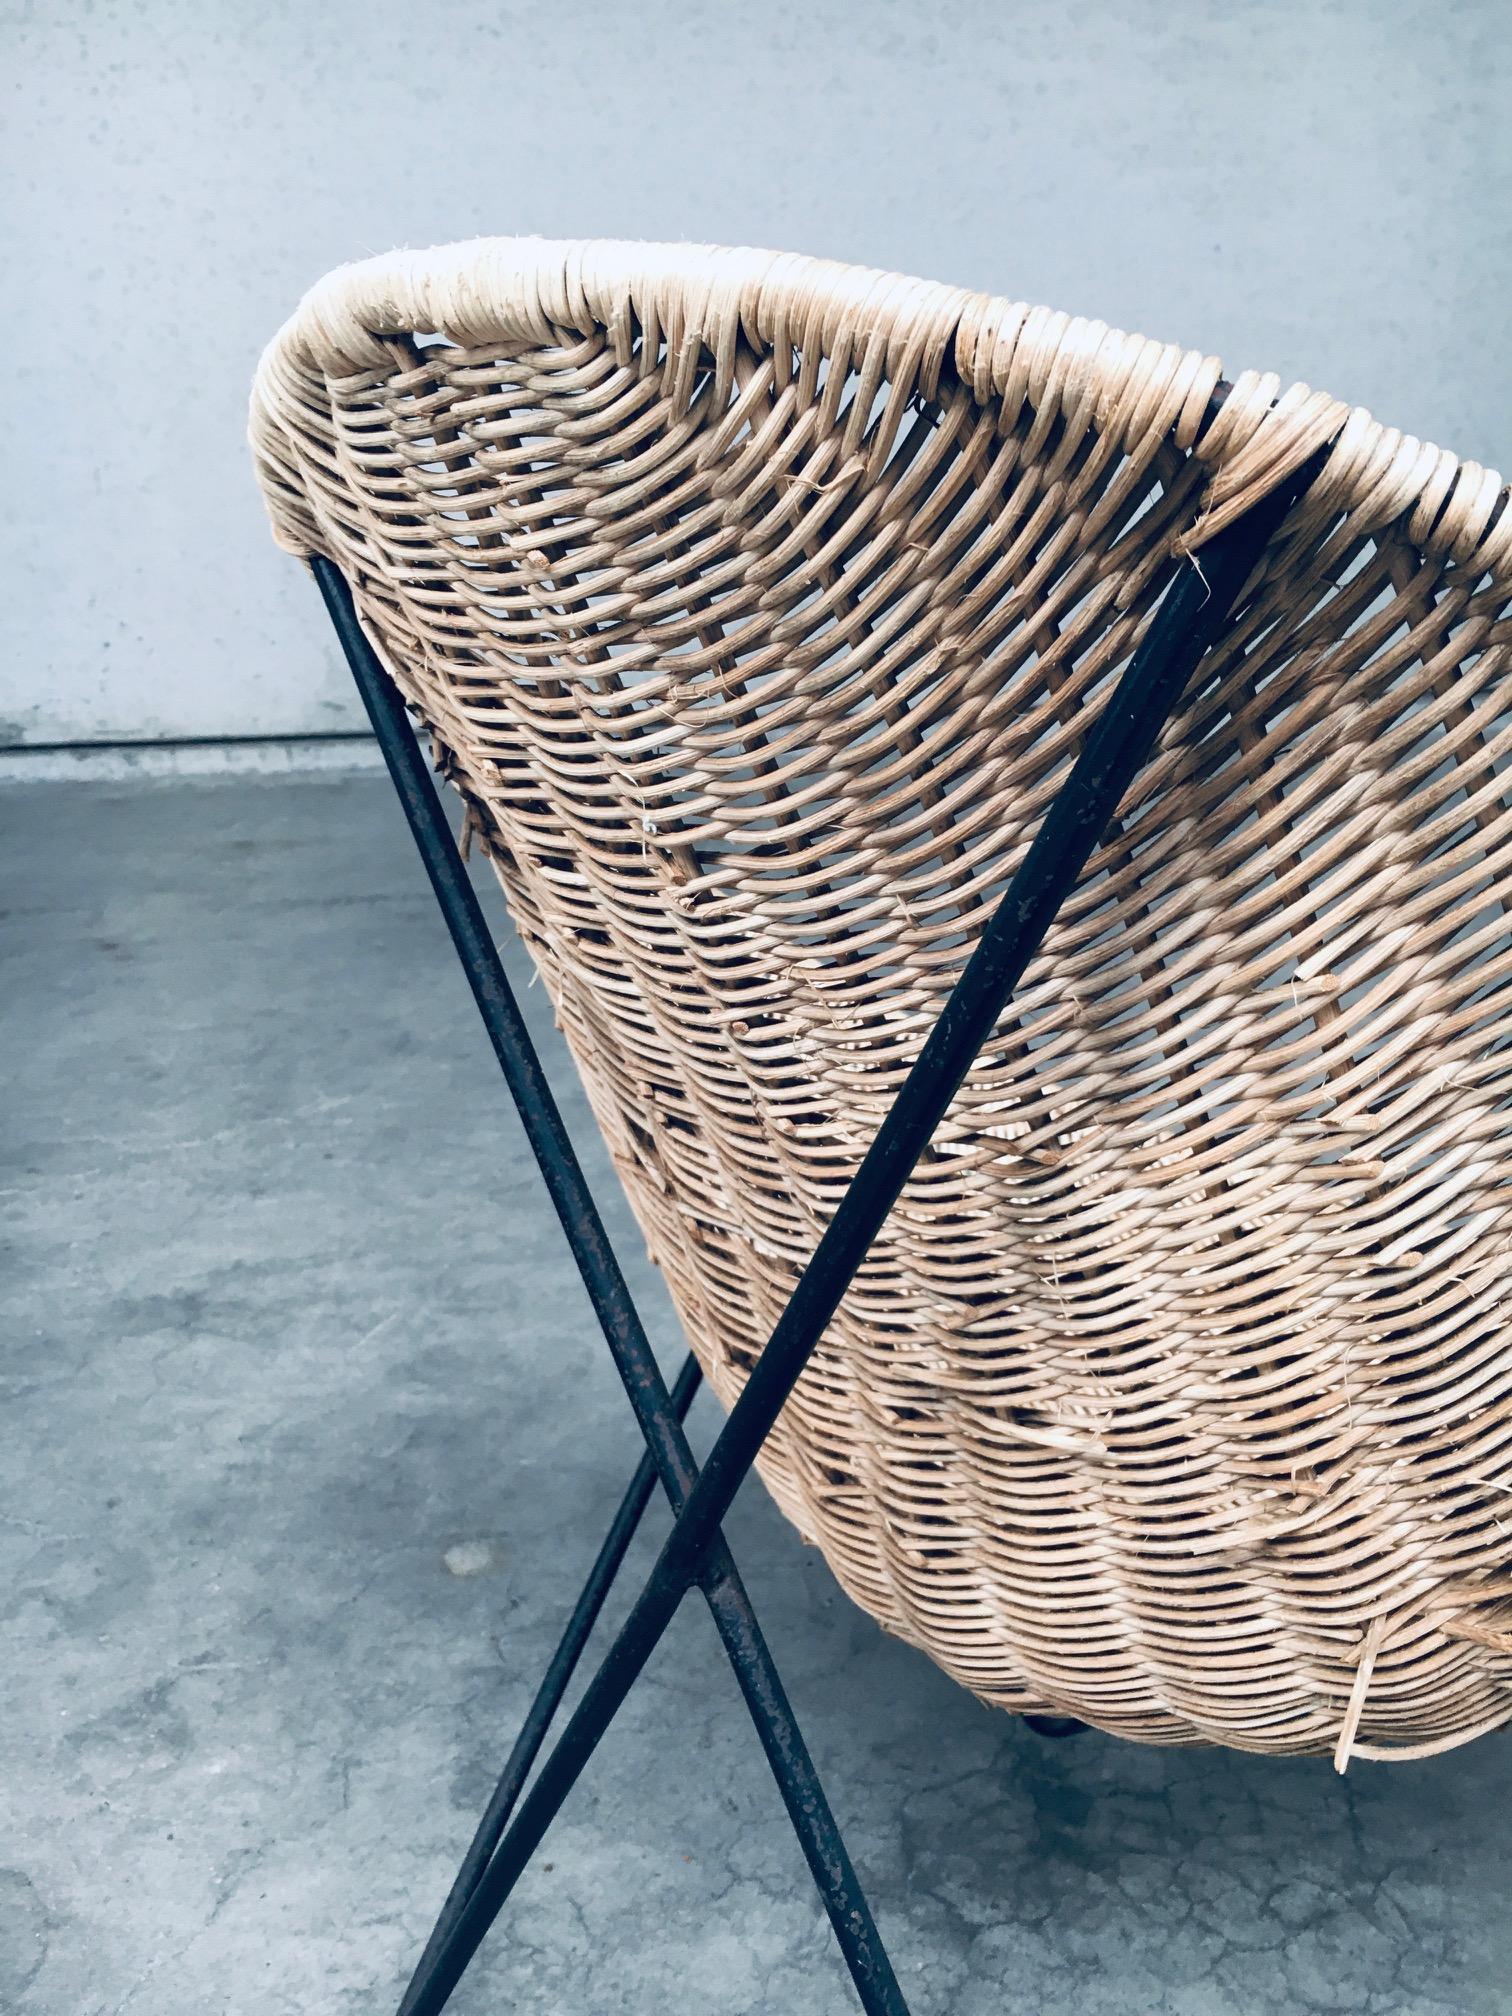 Midcentury Modern Design EGG Basket Wicker Chair set, Italy 1950's For Sale 12